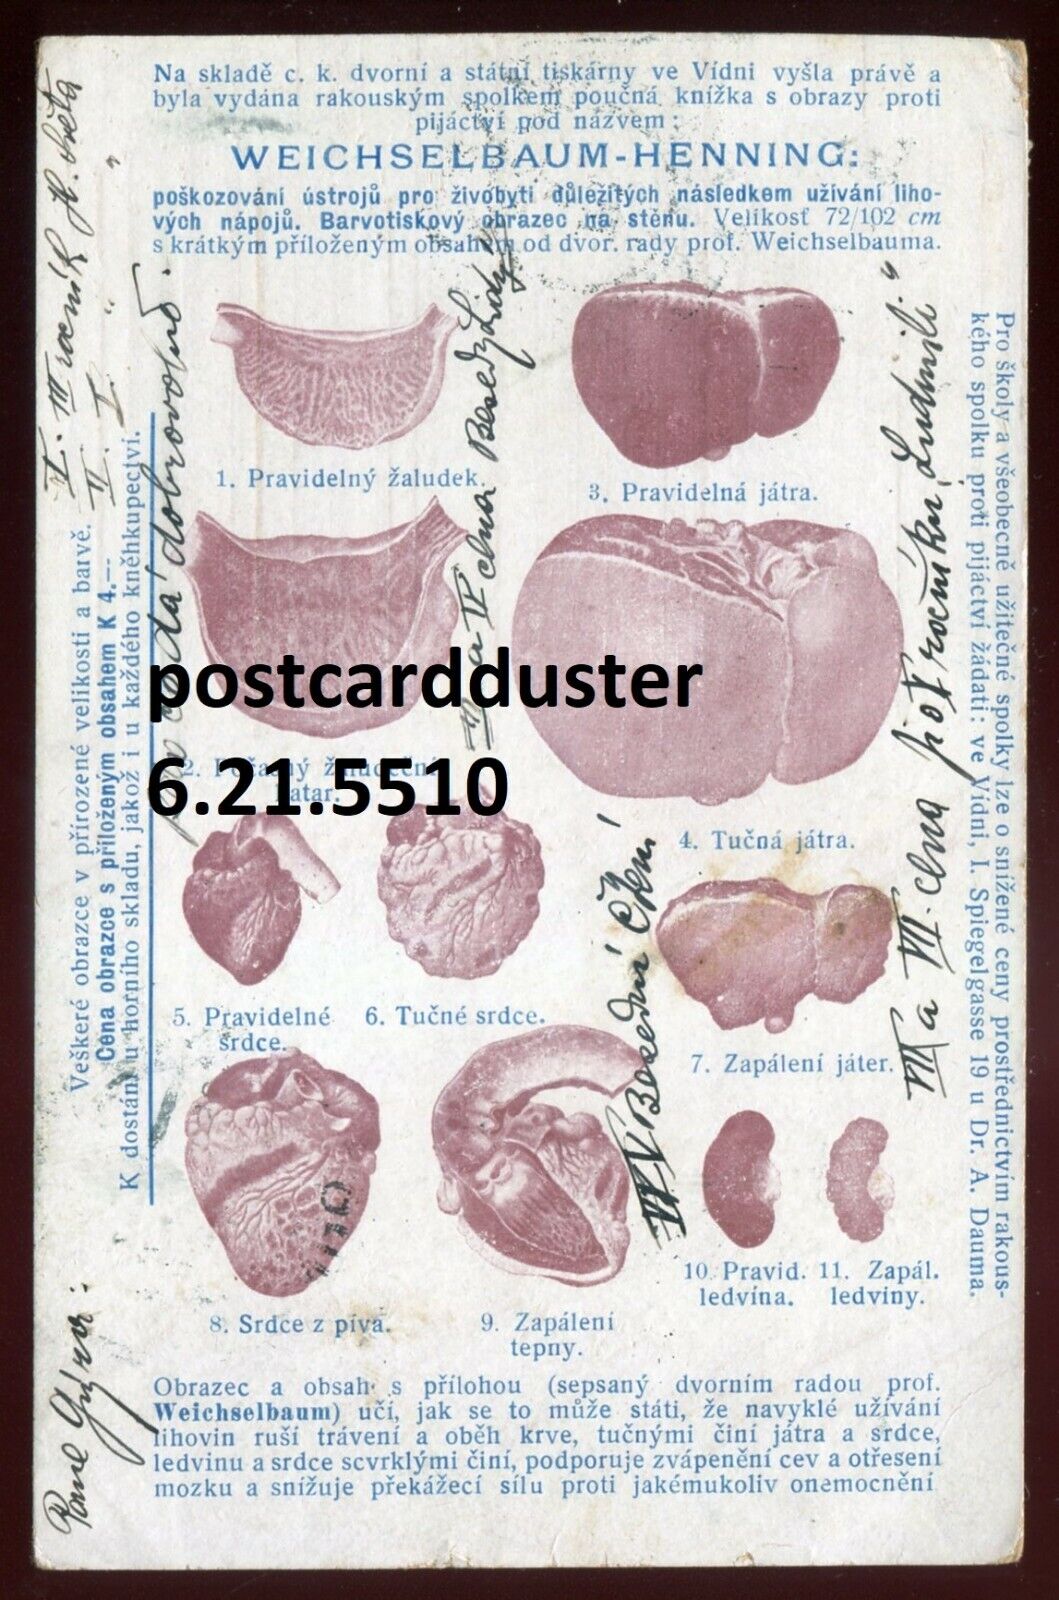 Austria / CZECHIA Postcard 1905 Temperance Organ Disease Illustrations. Medical